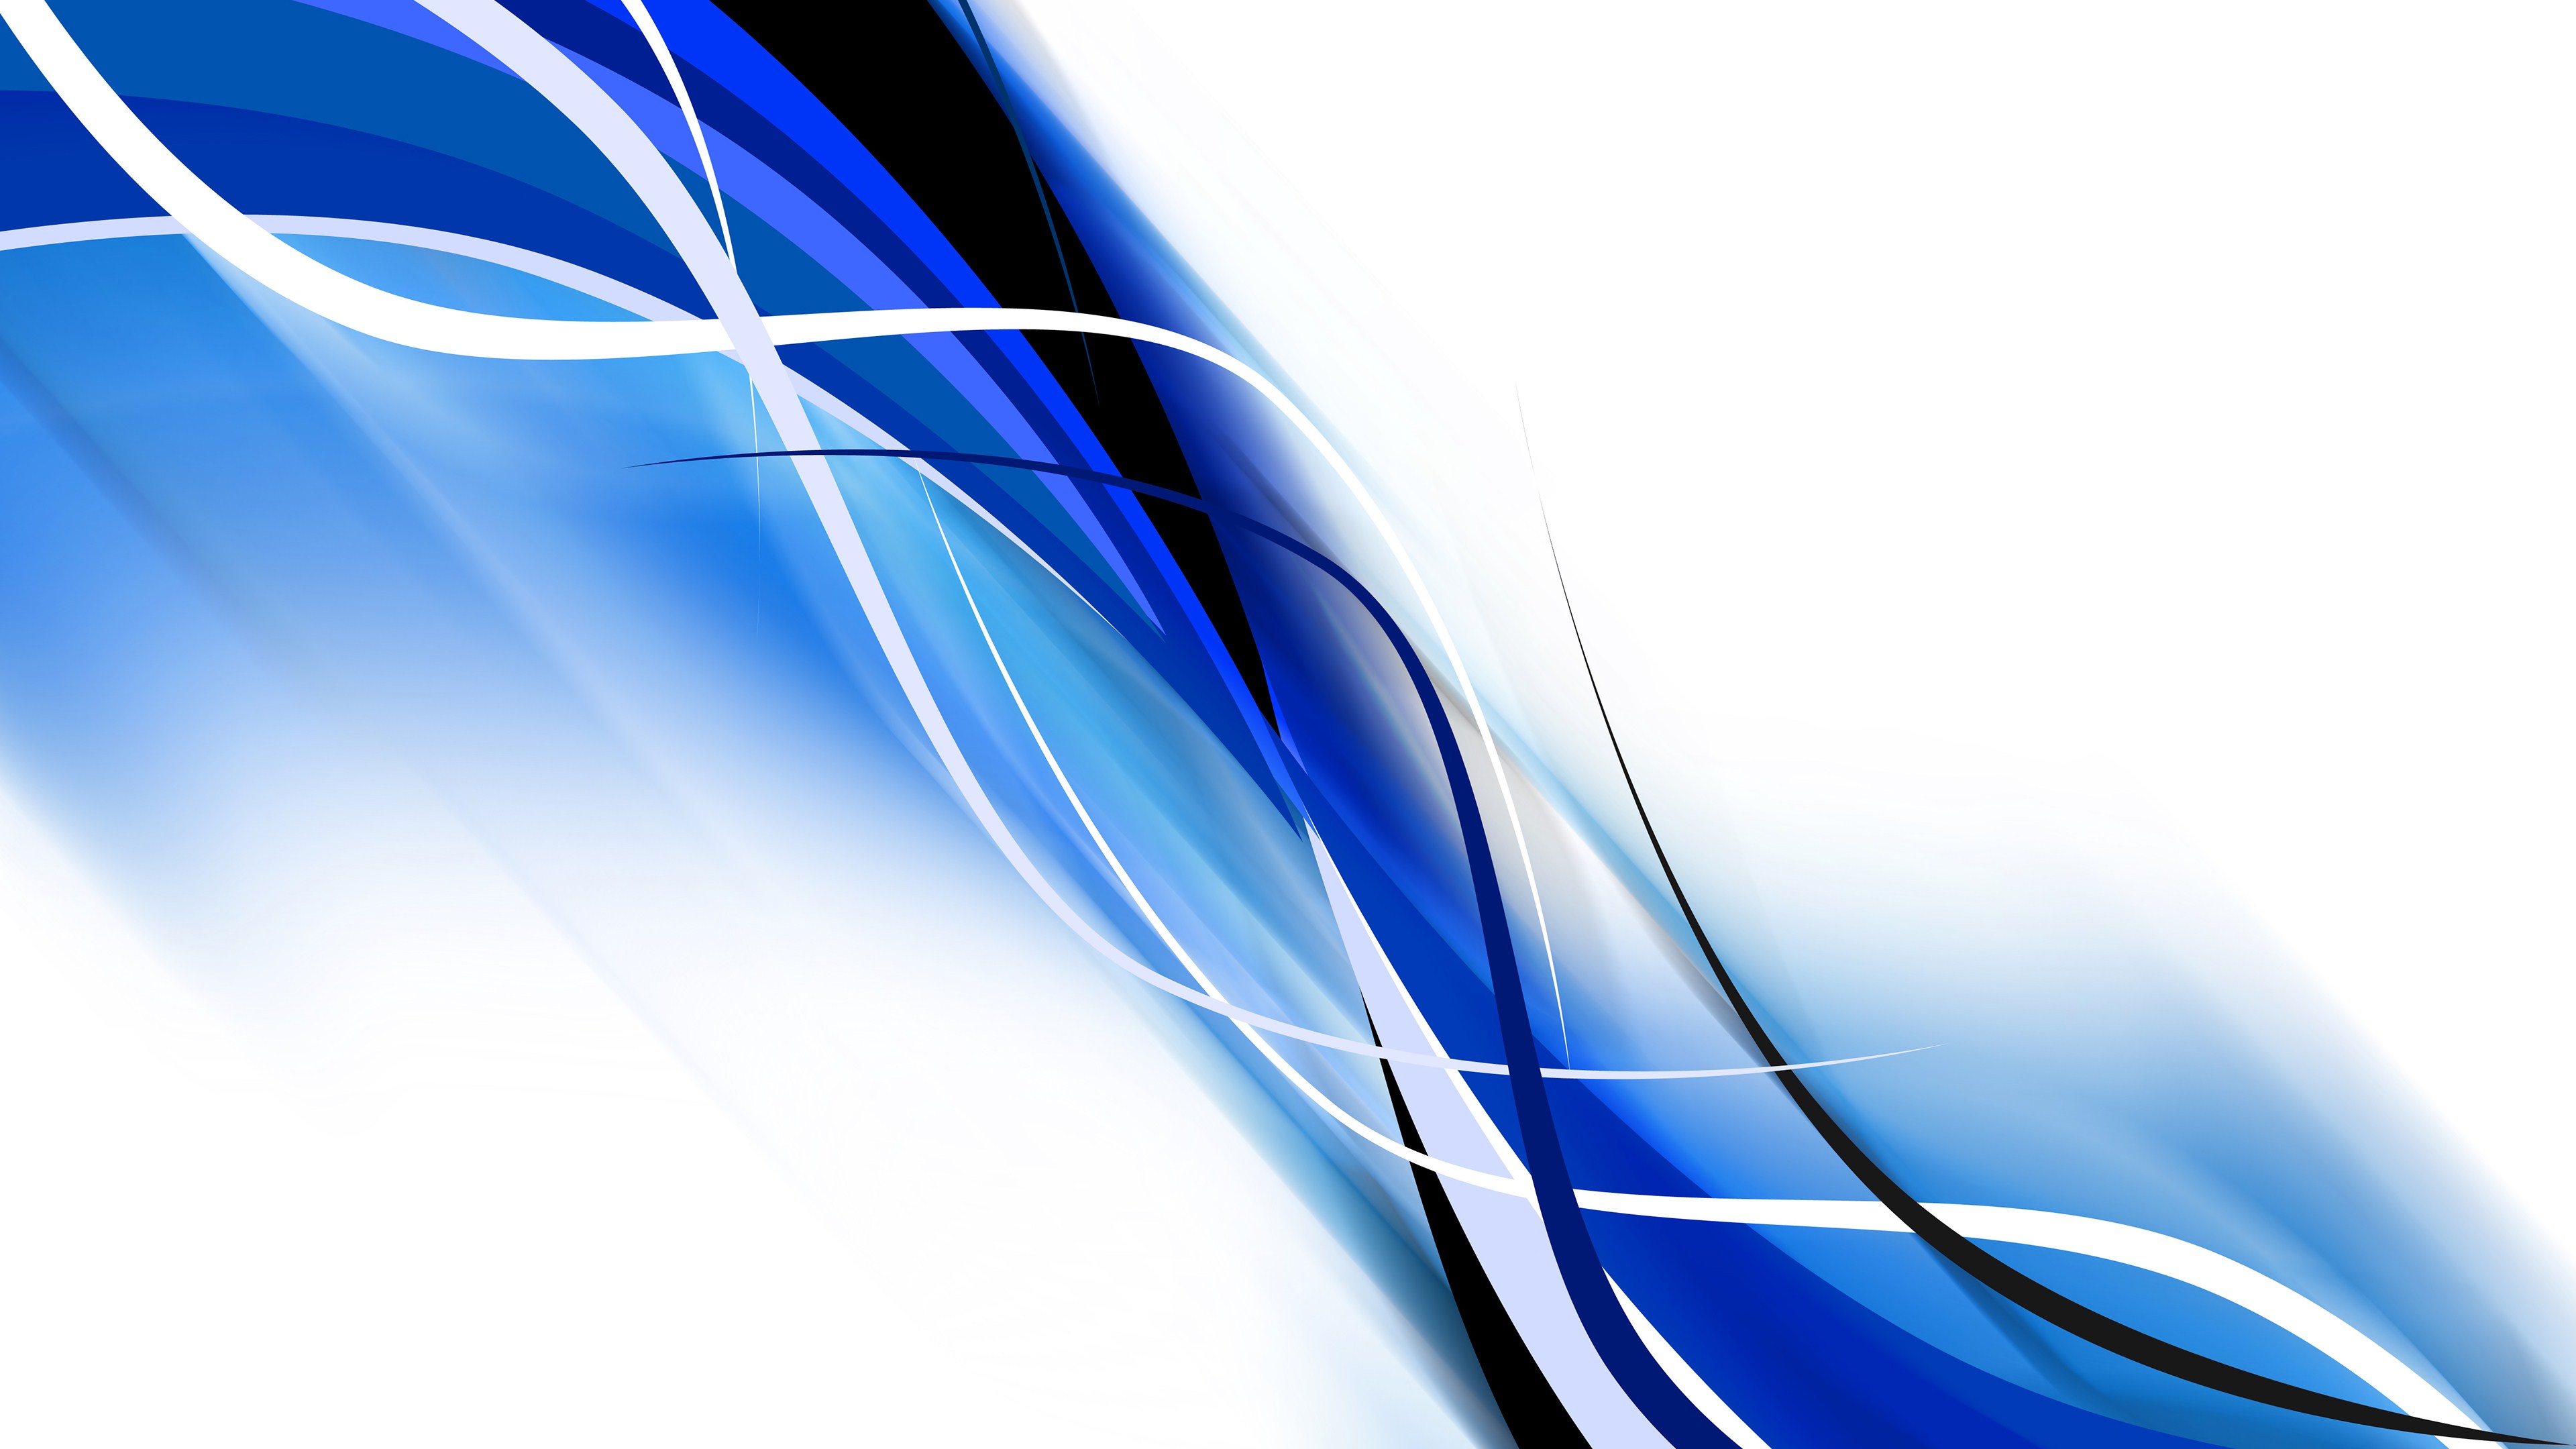 Download 660 Background Garis Putih Biru HD Terbaru